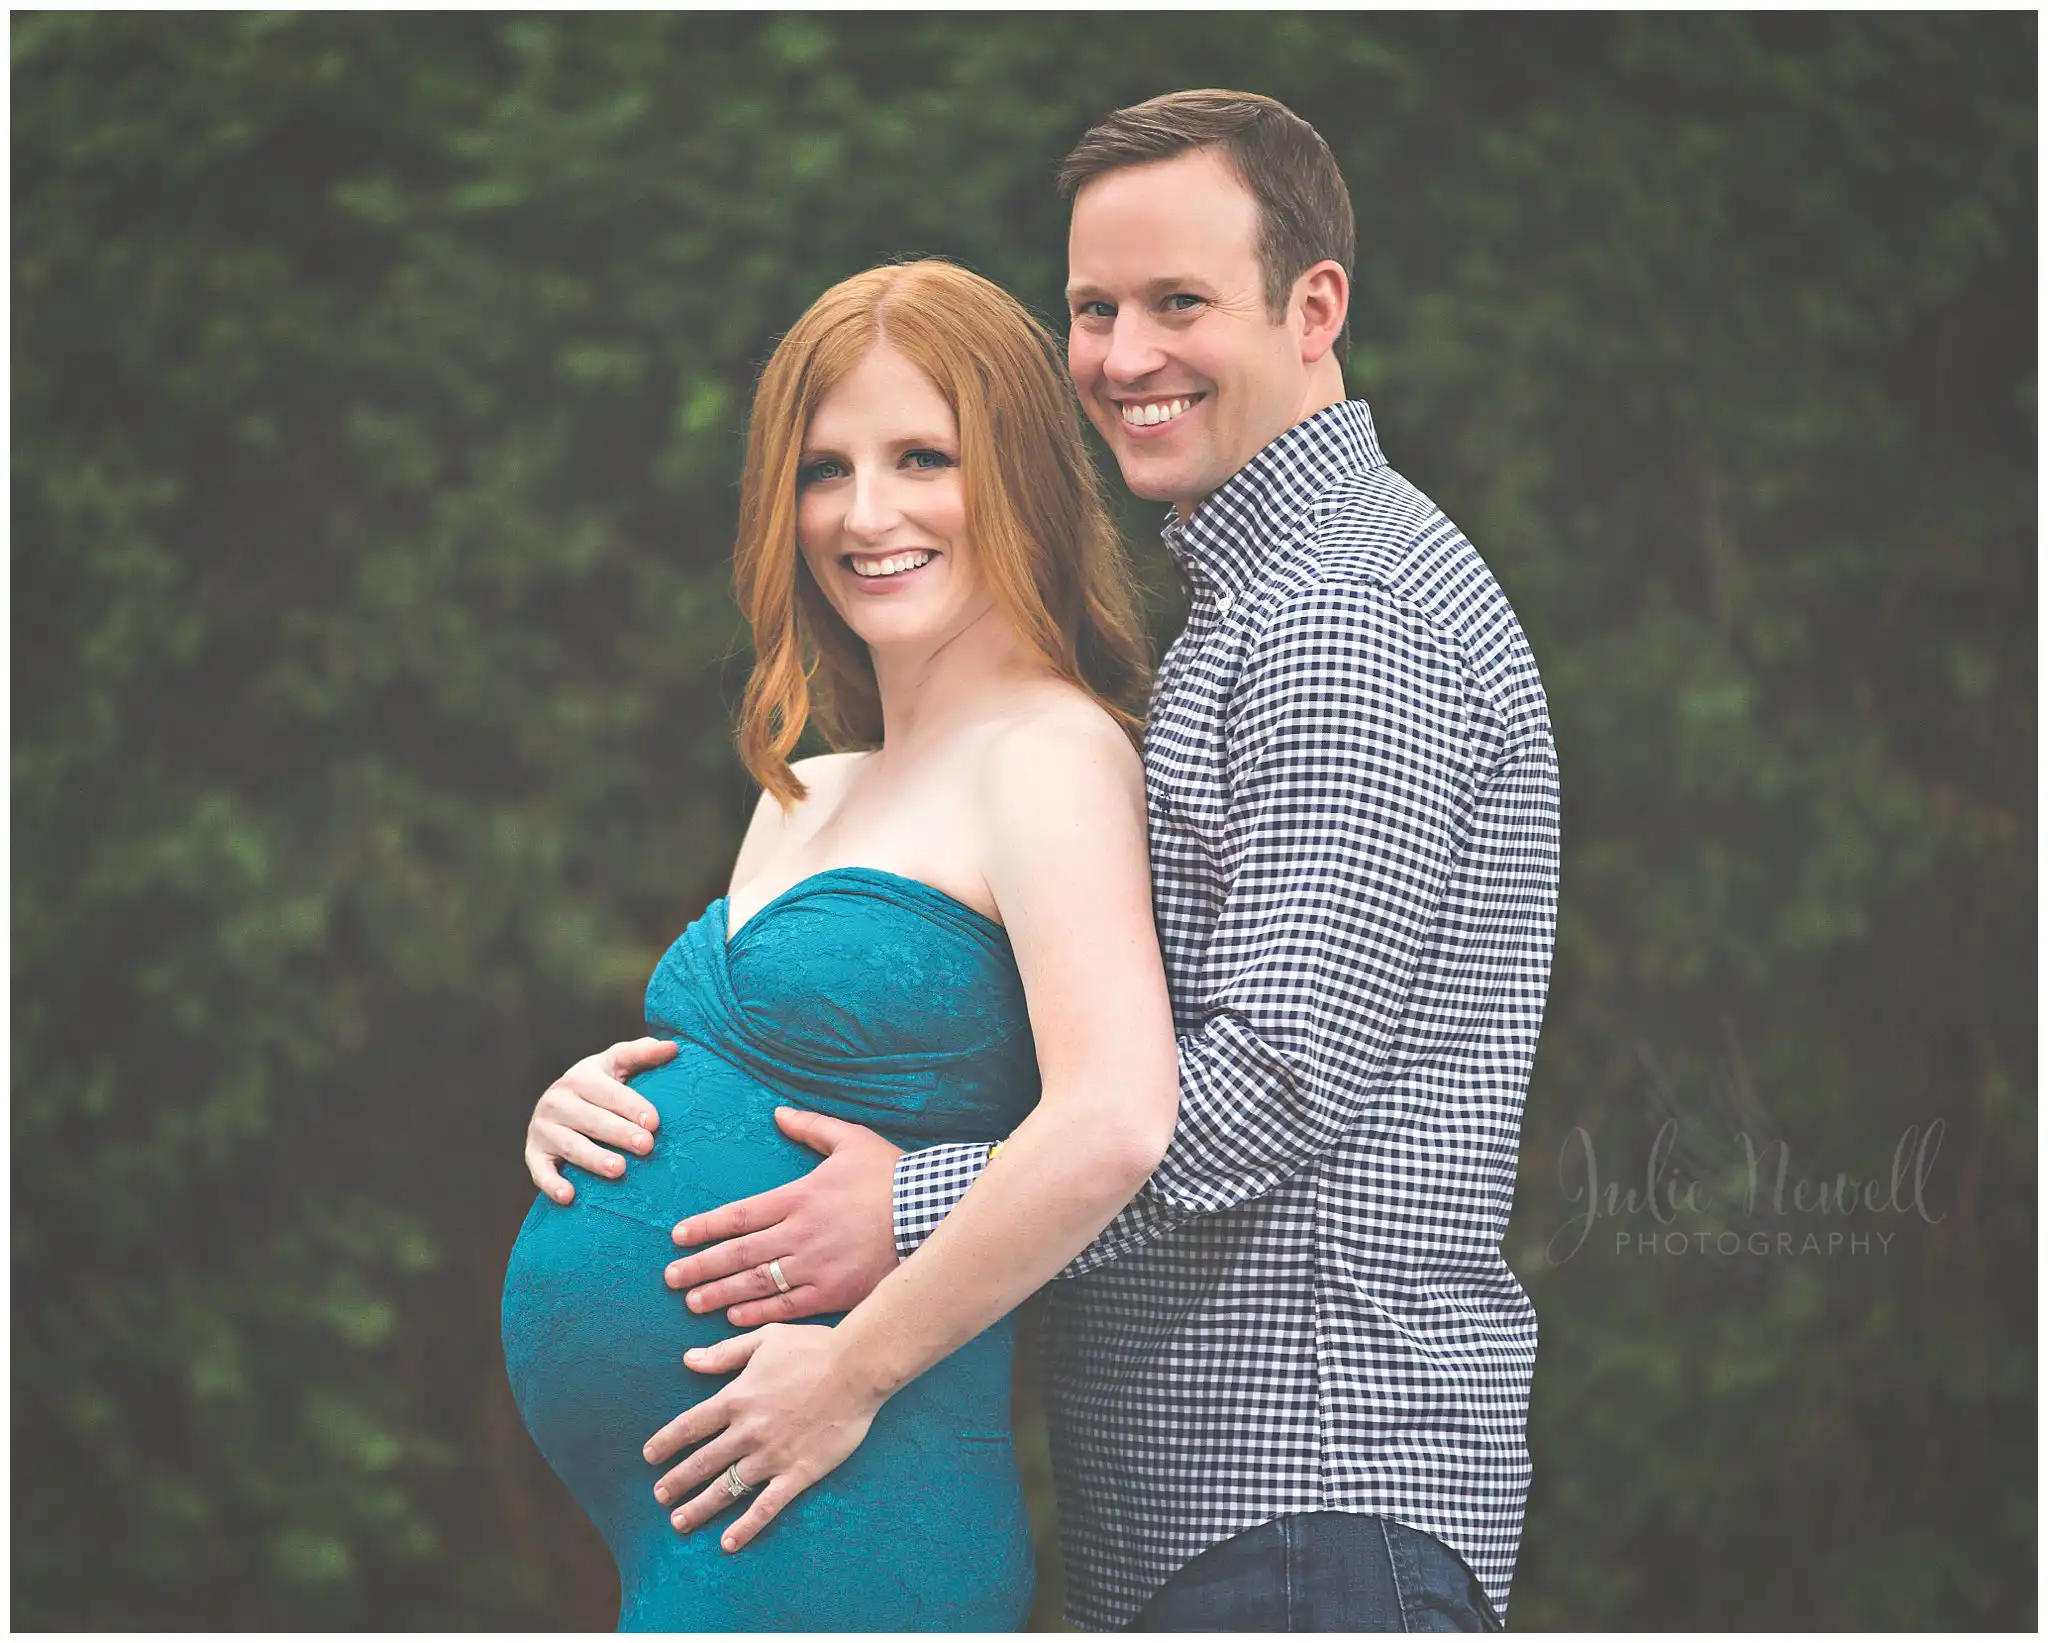 Maternity Photoshoot | Maternity photography poses couple, Couple pregnancy  photoshoot, Pregnancy photoshoot